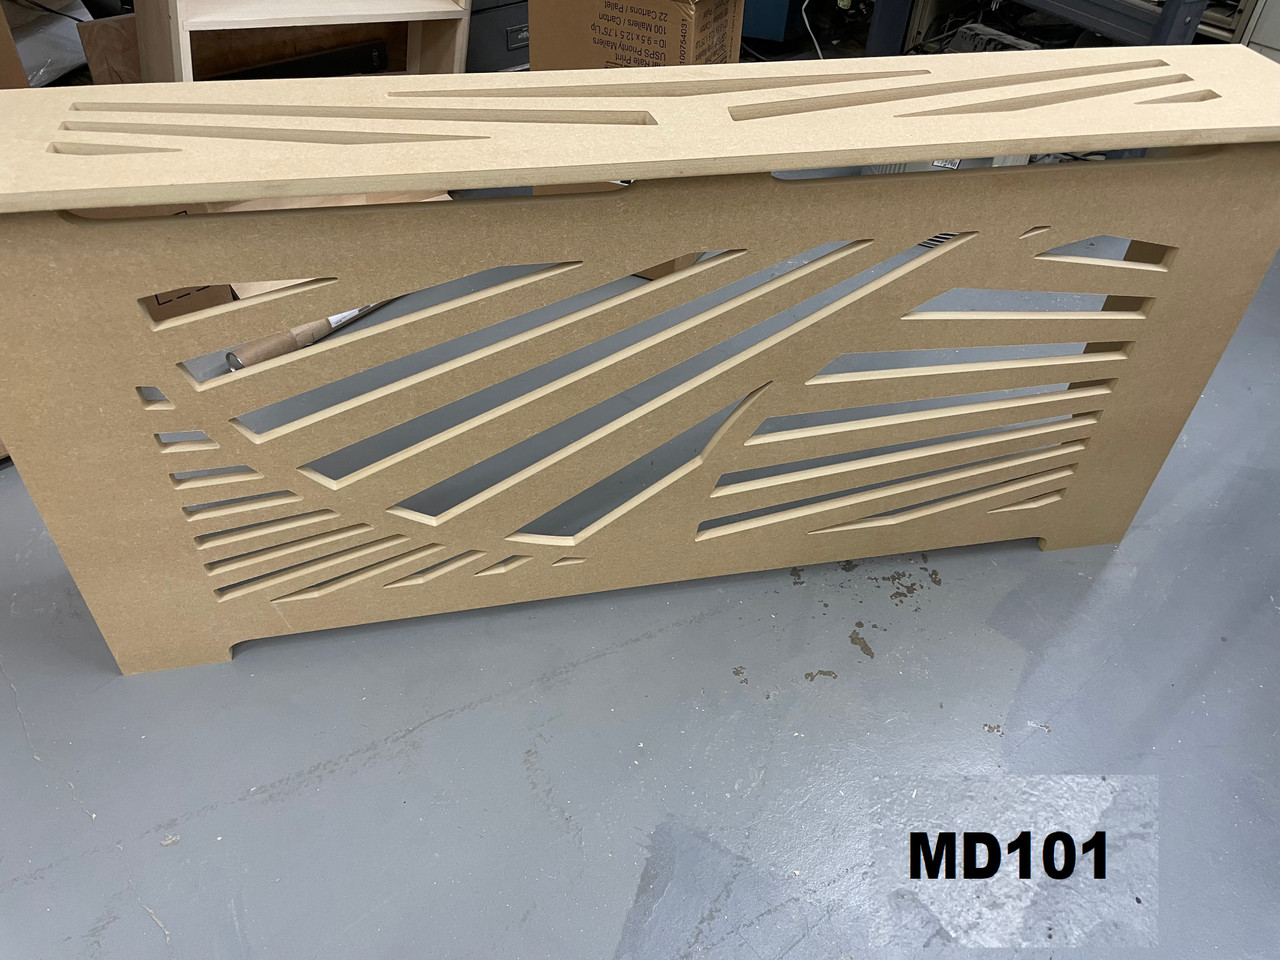 Stella Modern Heat Cover Cabinet, High Quality Medex Wood Radiator C –  ArtMillwork Design